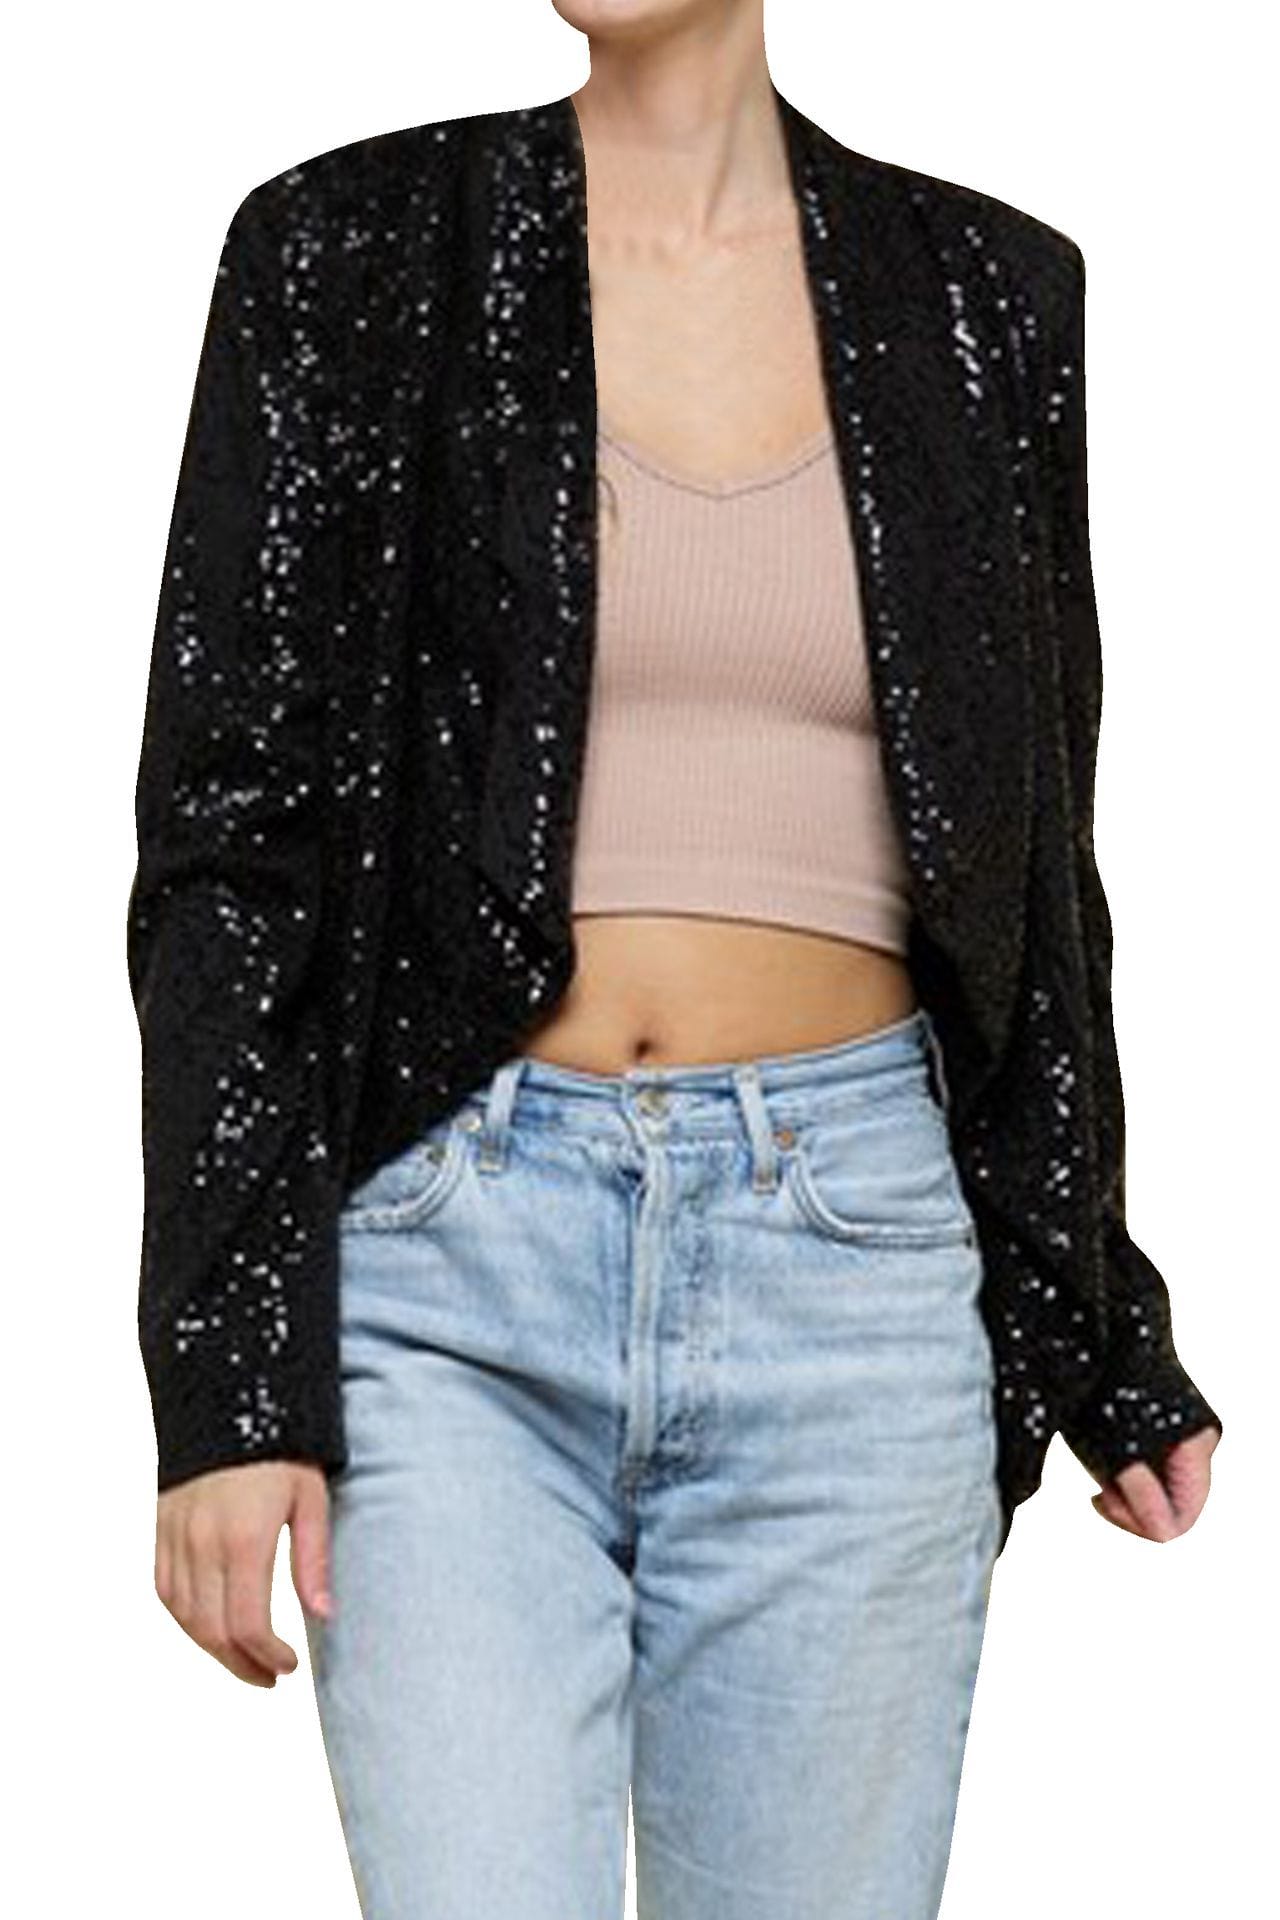 "black sequin jacket plus size" "Kyle X Shahida" "sequin blazer jacket" "black jacket with sequins" "black sequin jacket"